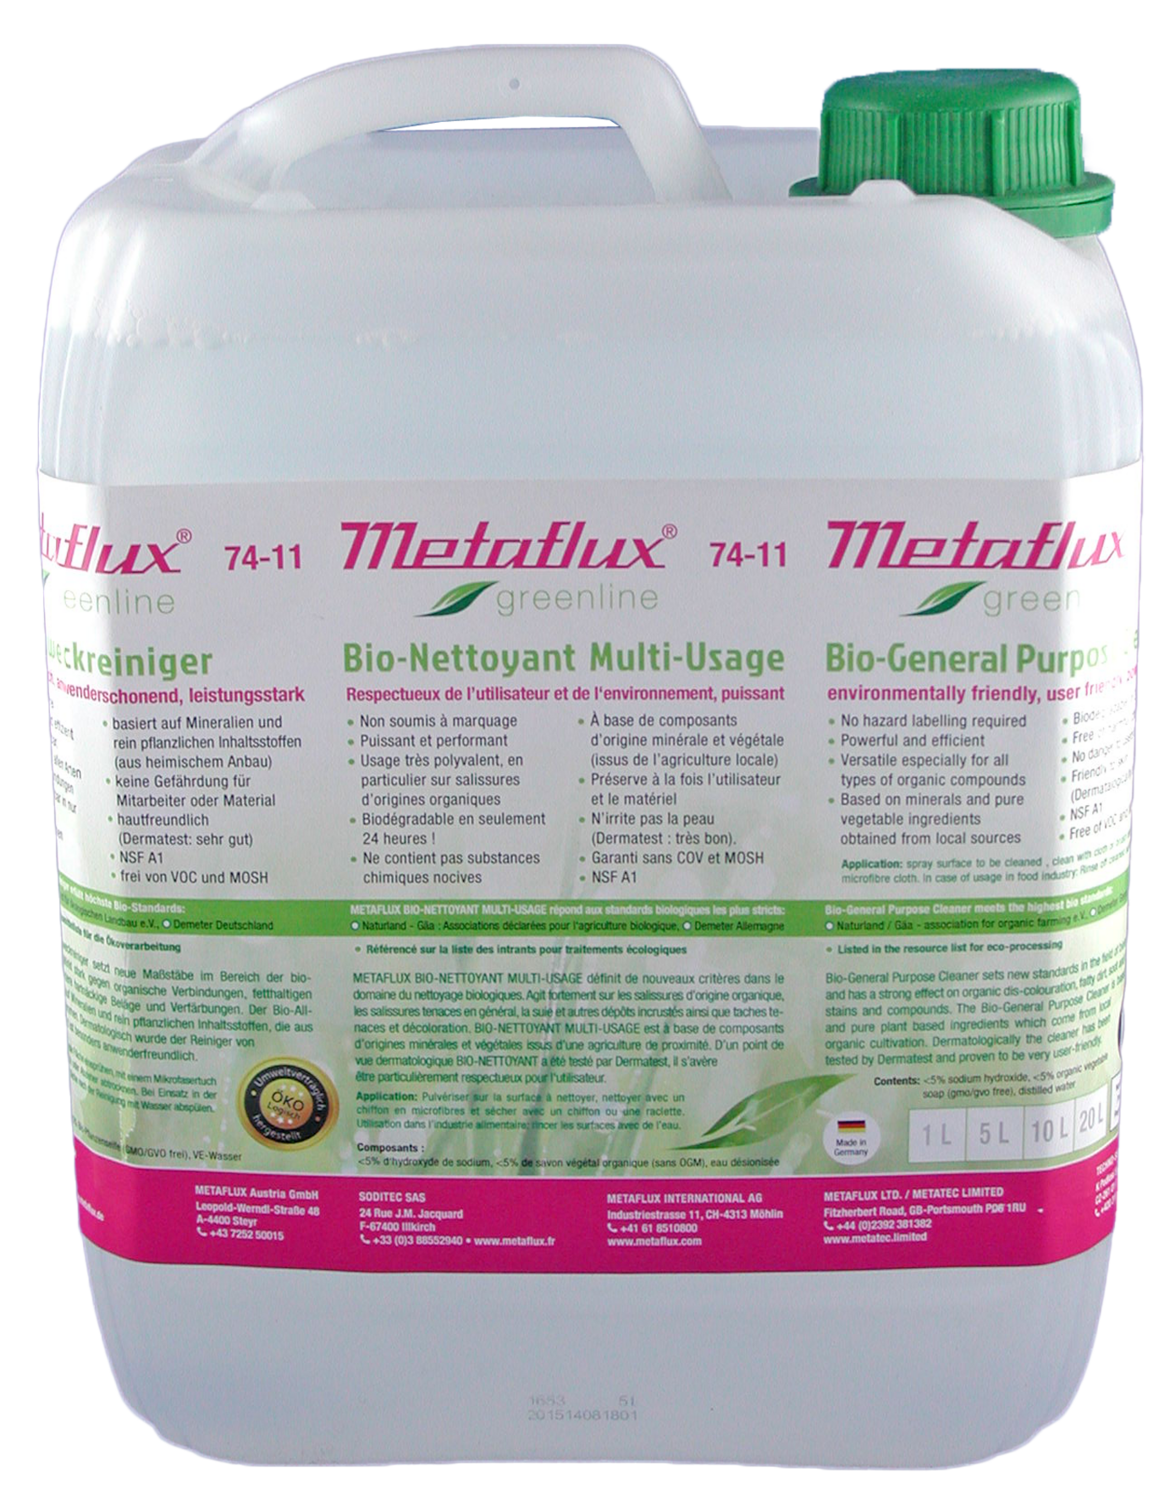 Metaflux Greenline Biologische Allesreiniger NSF 5 L